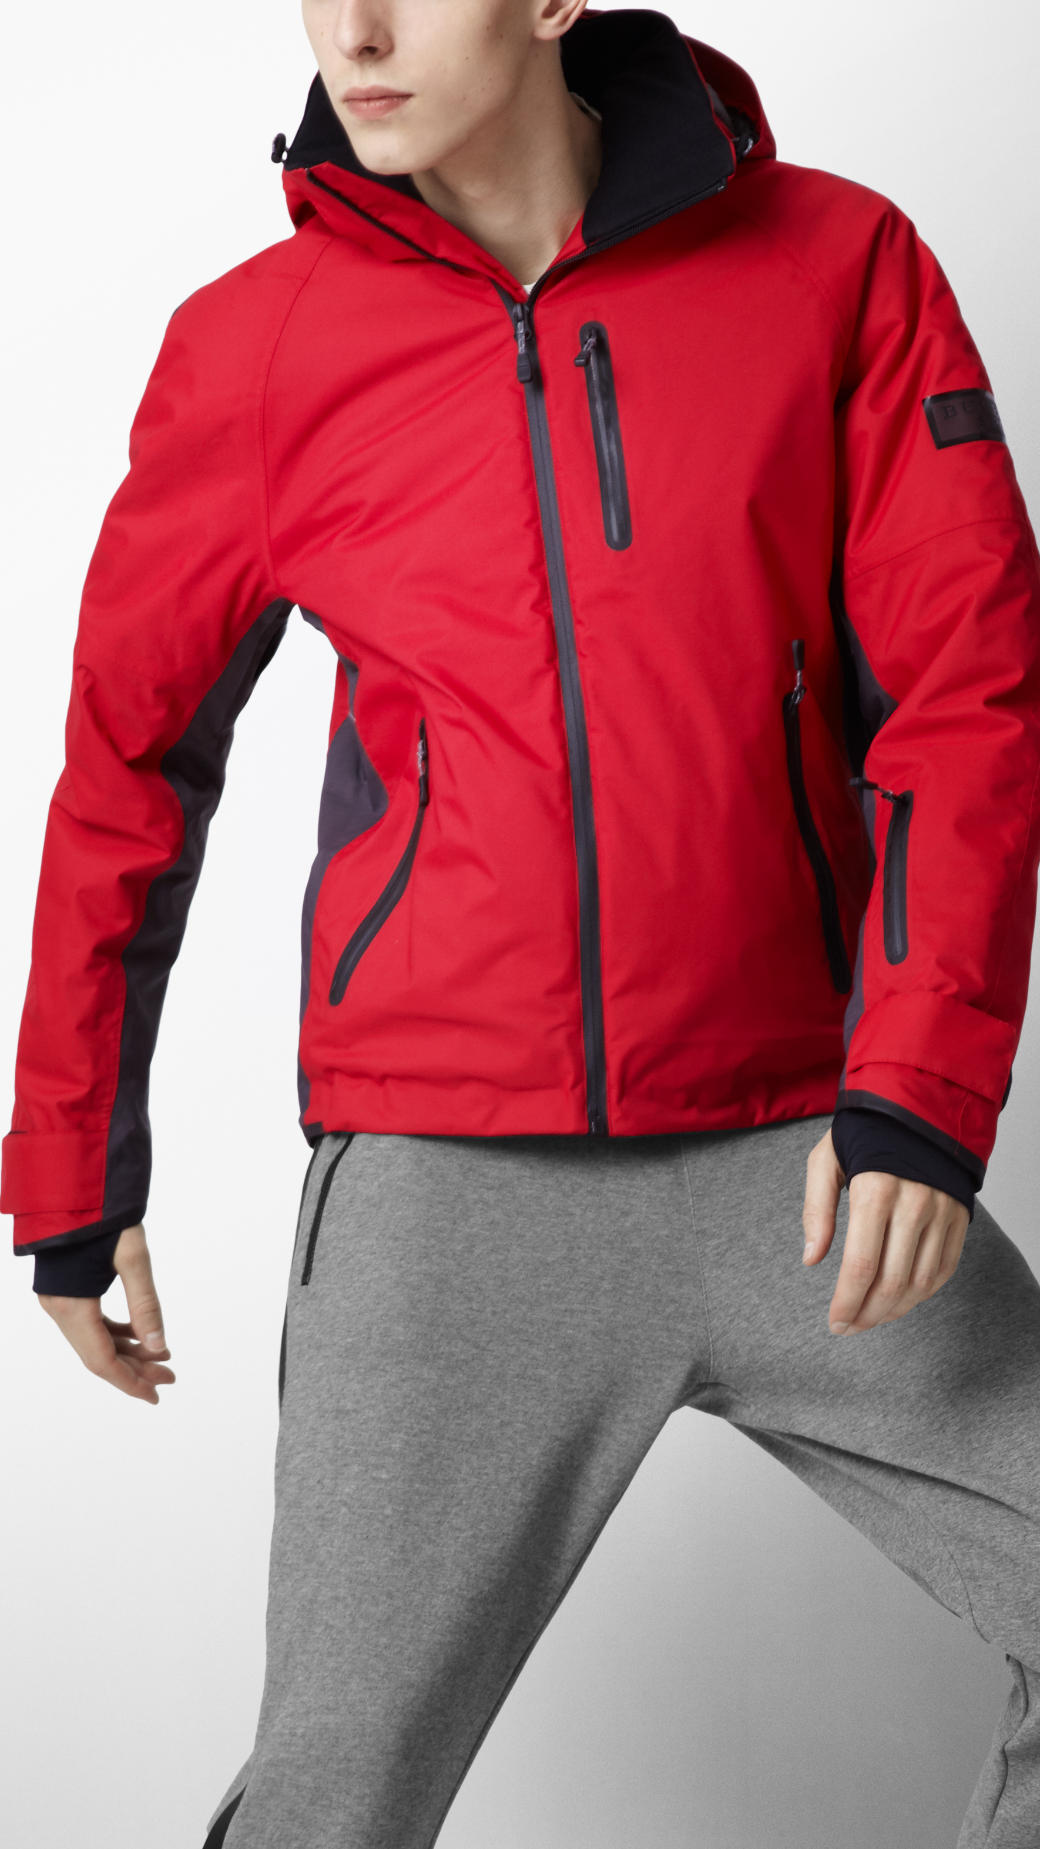 Burberry Sport Clothing Norway, SAVE 51% - raptorunderlayment.com